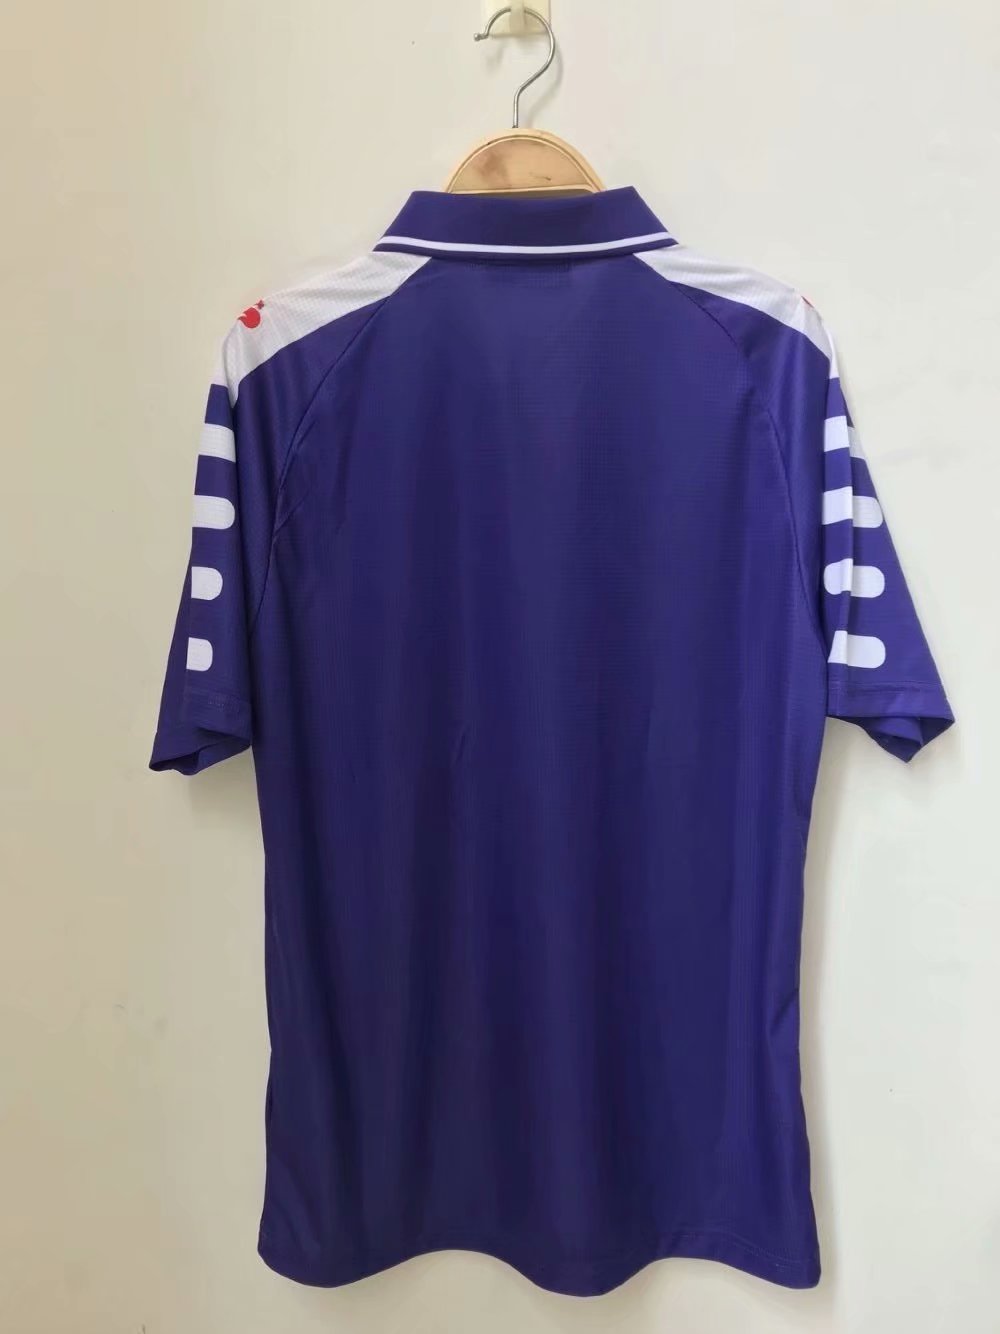 1998 Fiorentina Home Short Sleeve Shirt - That Retro Shirt Store